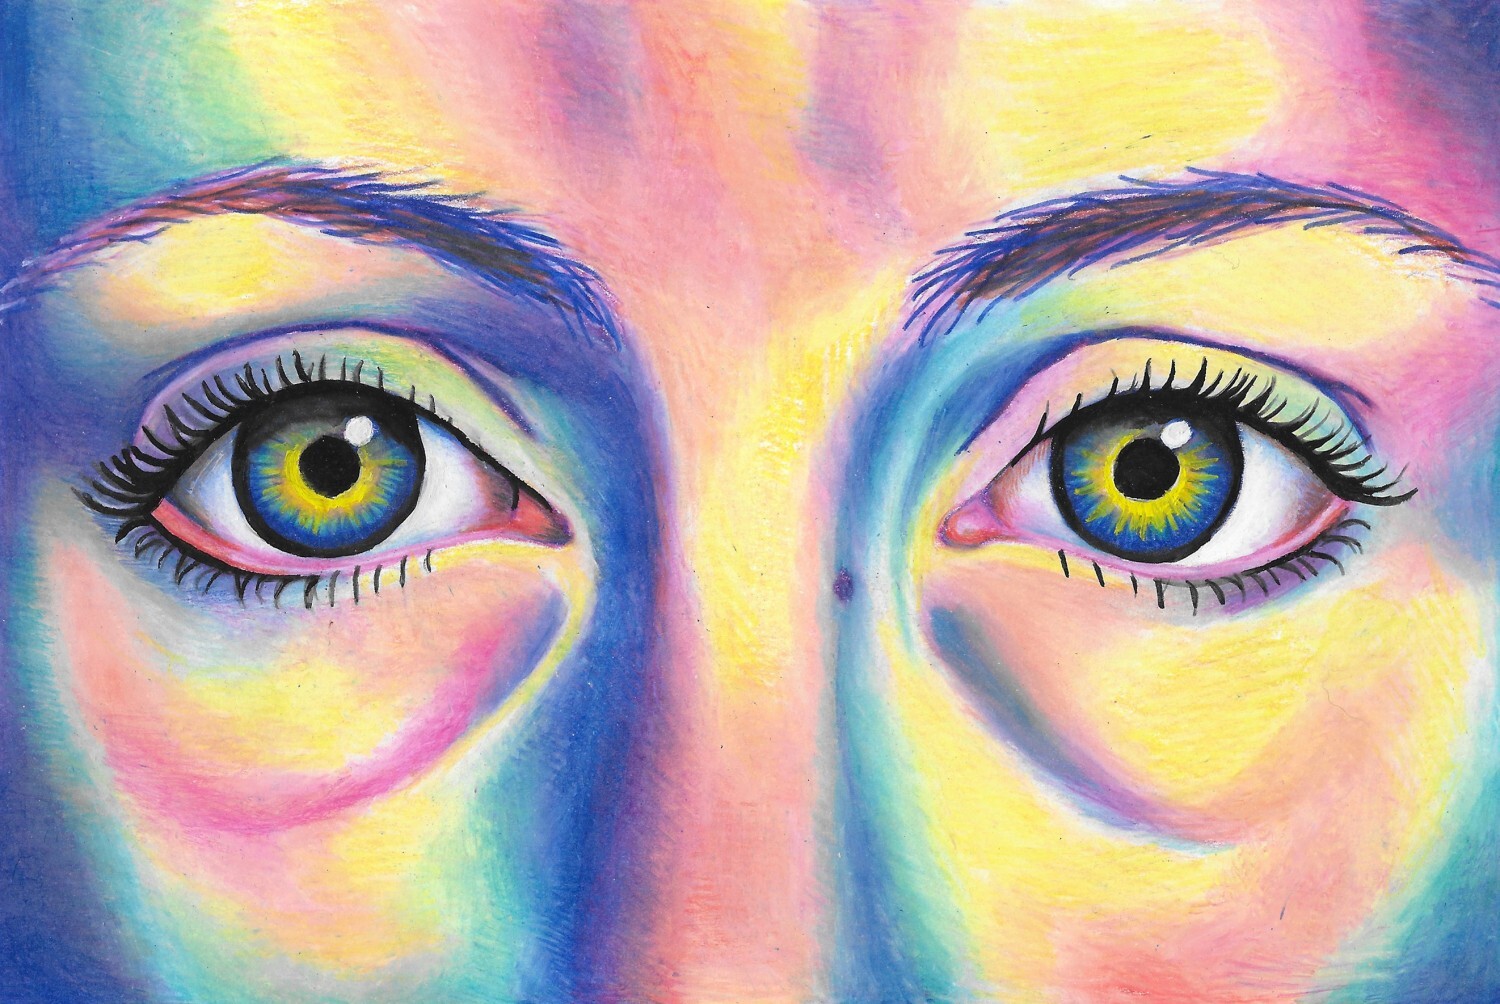 Self-Portrait Close-Up, 2013, colored pencil and gouache.